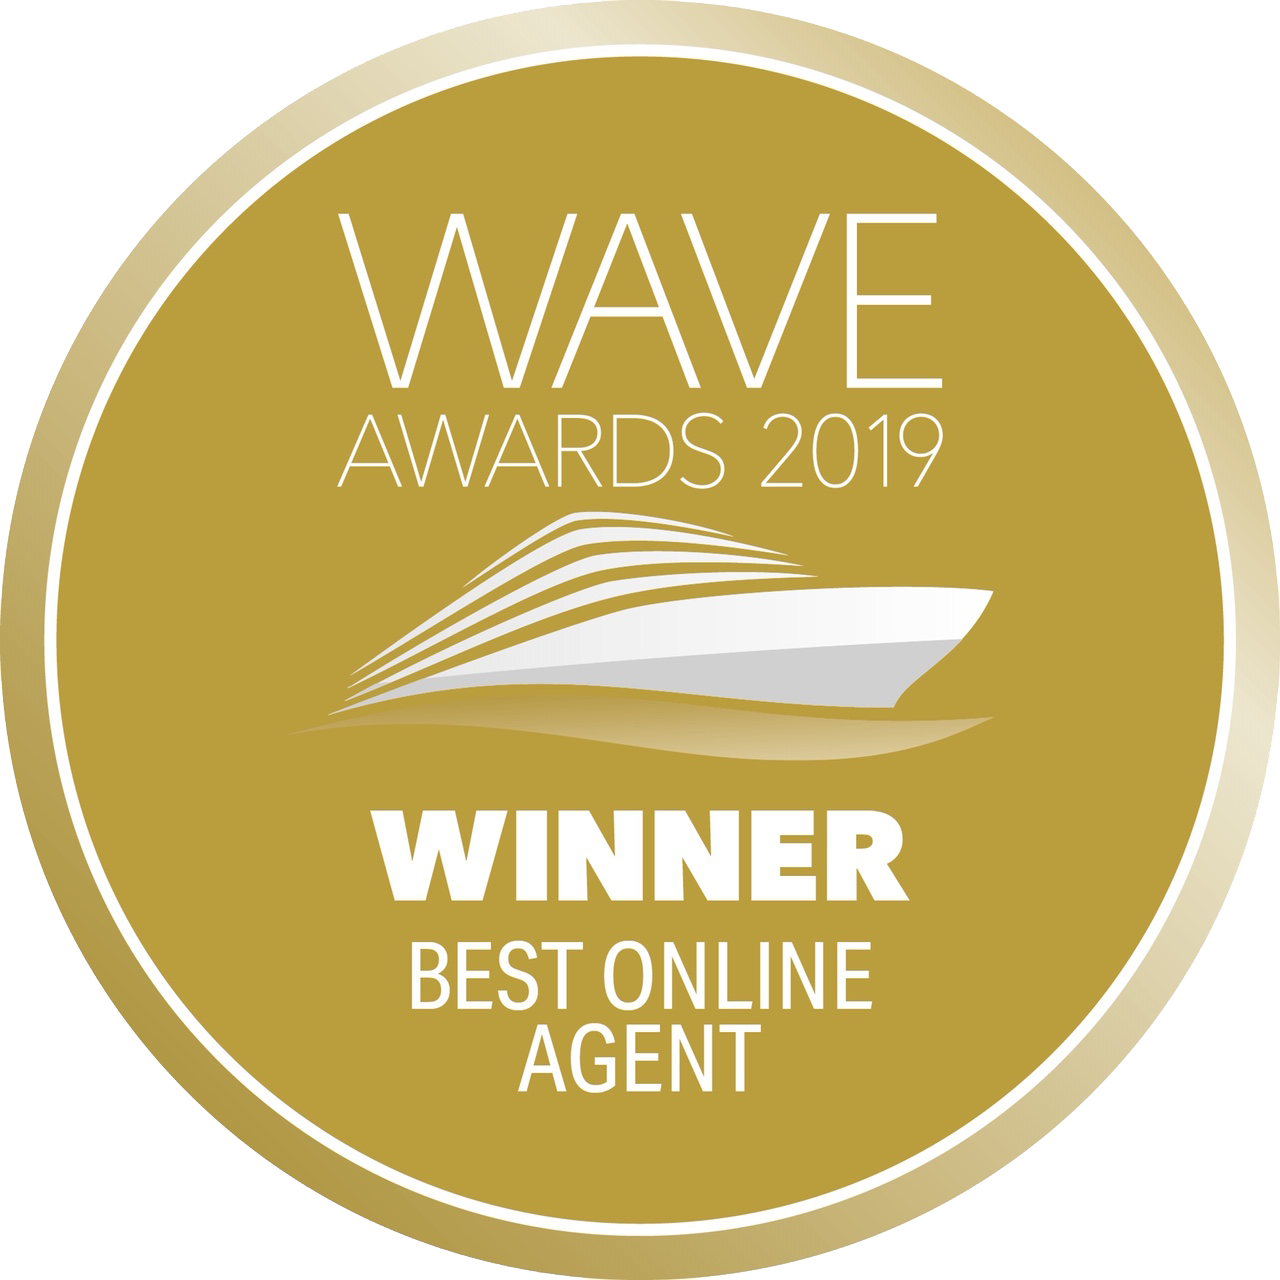 WAVE awards 2019 Winner Best online agent